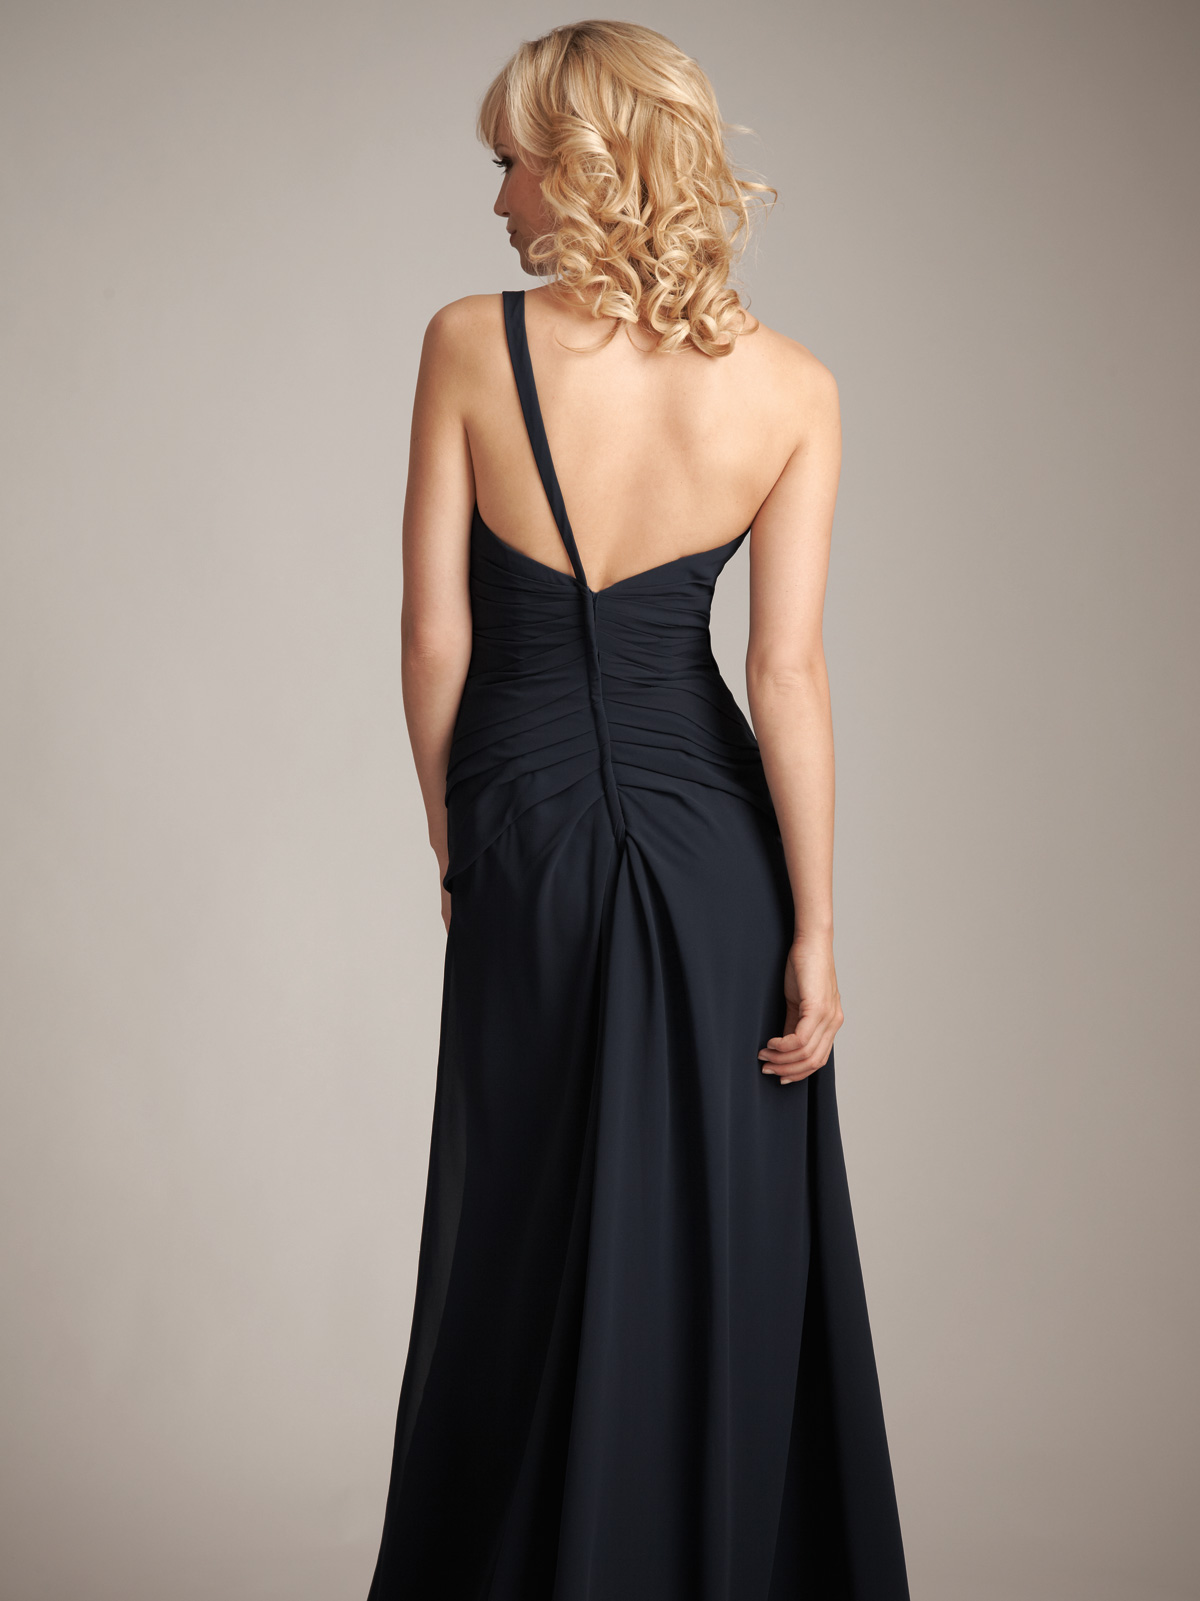 long black dress 